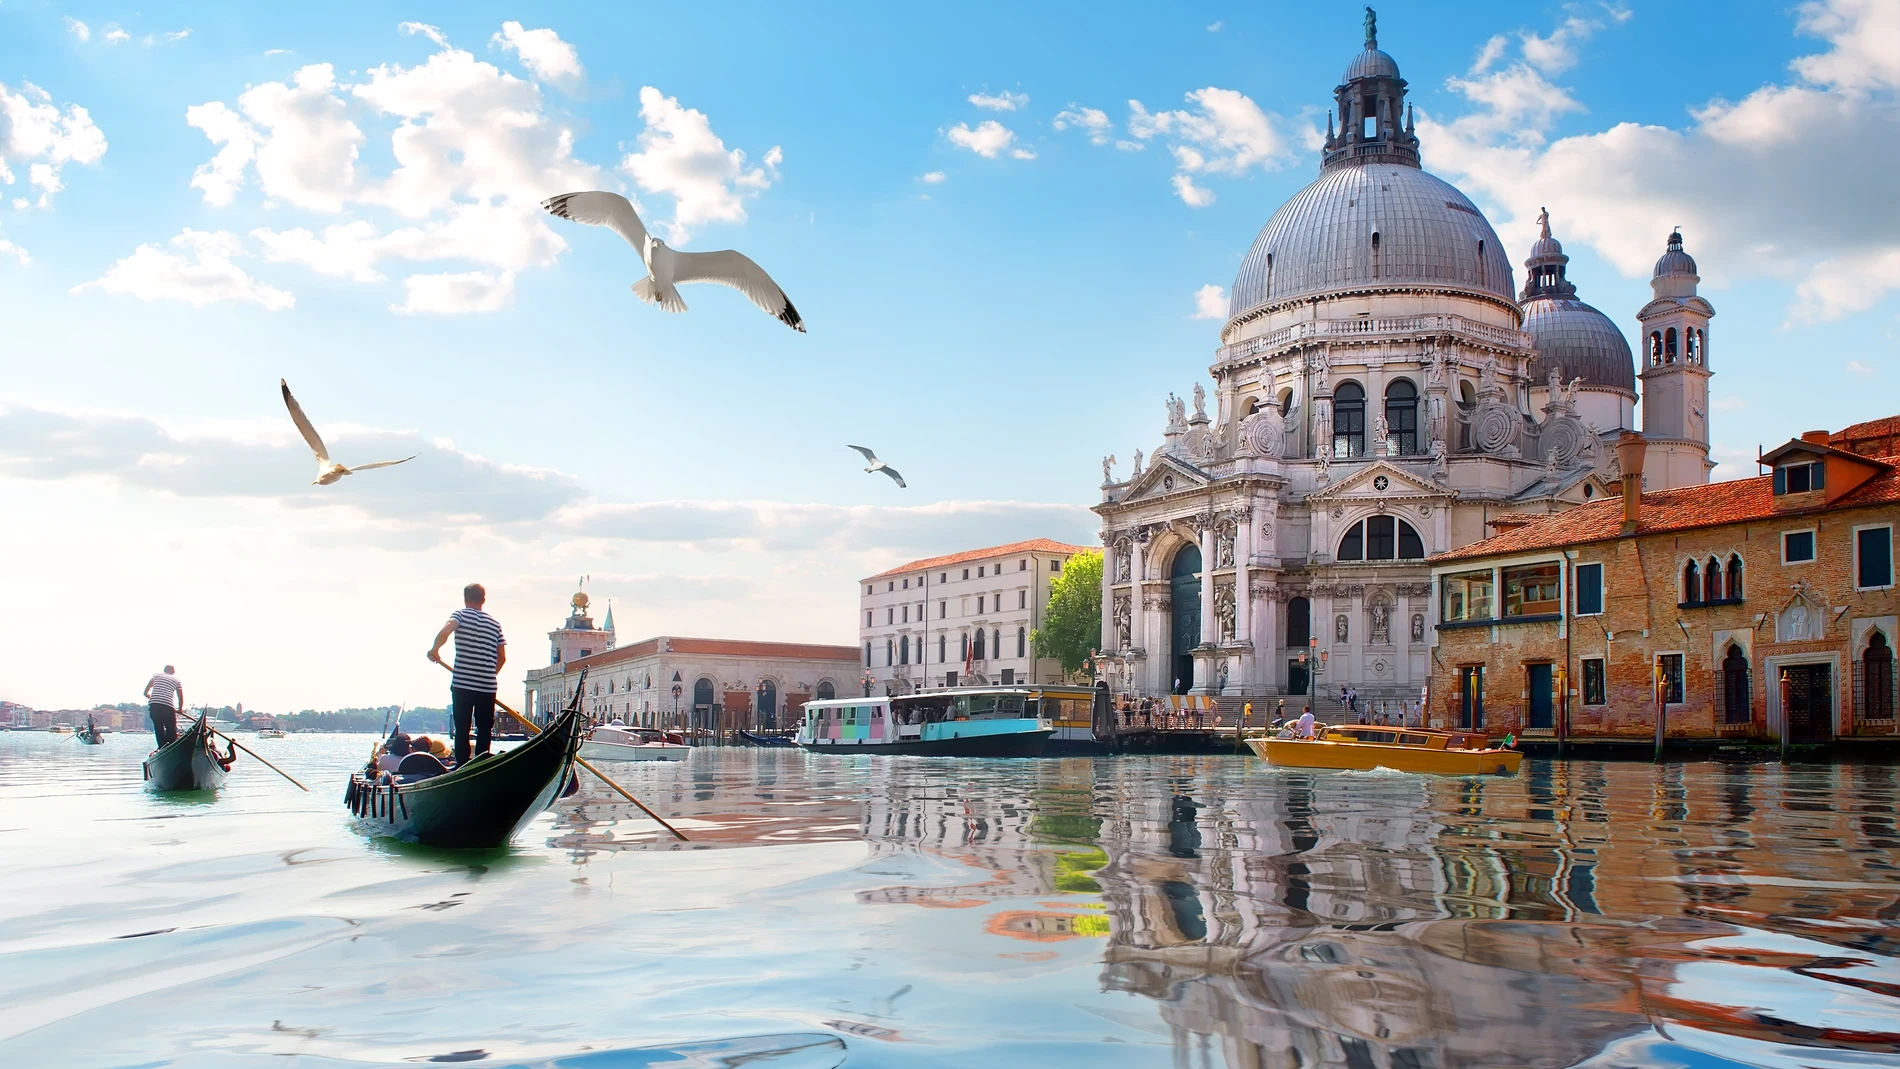 Venecia, sede de la famosa bienal de Venecia